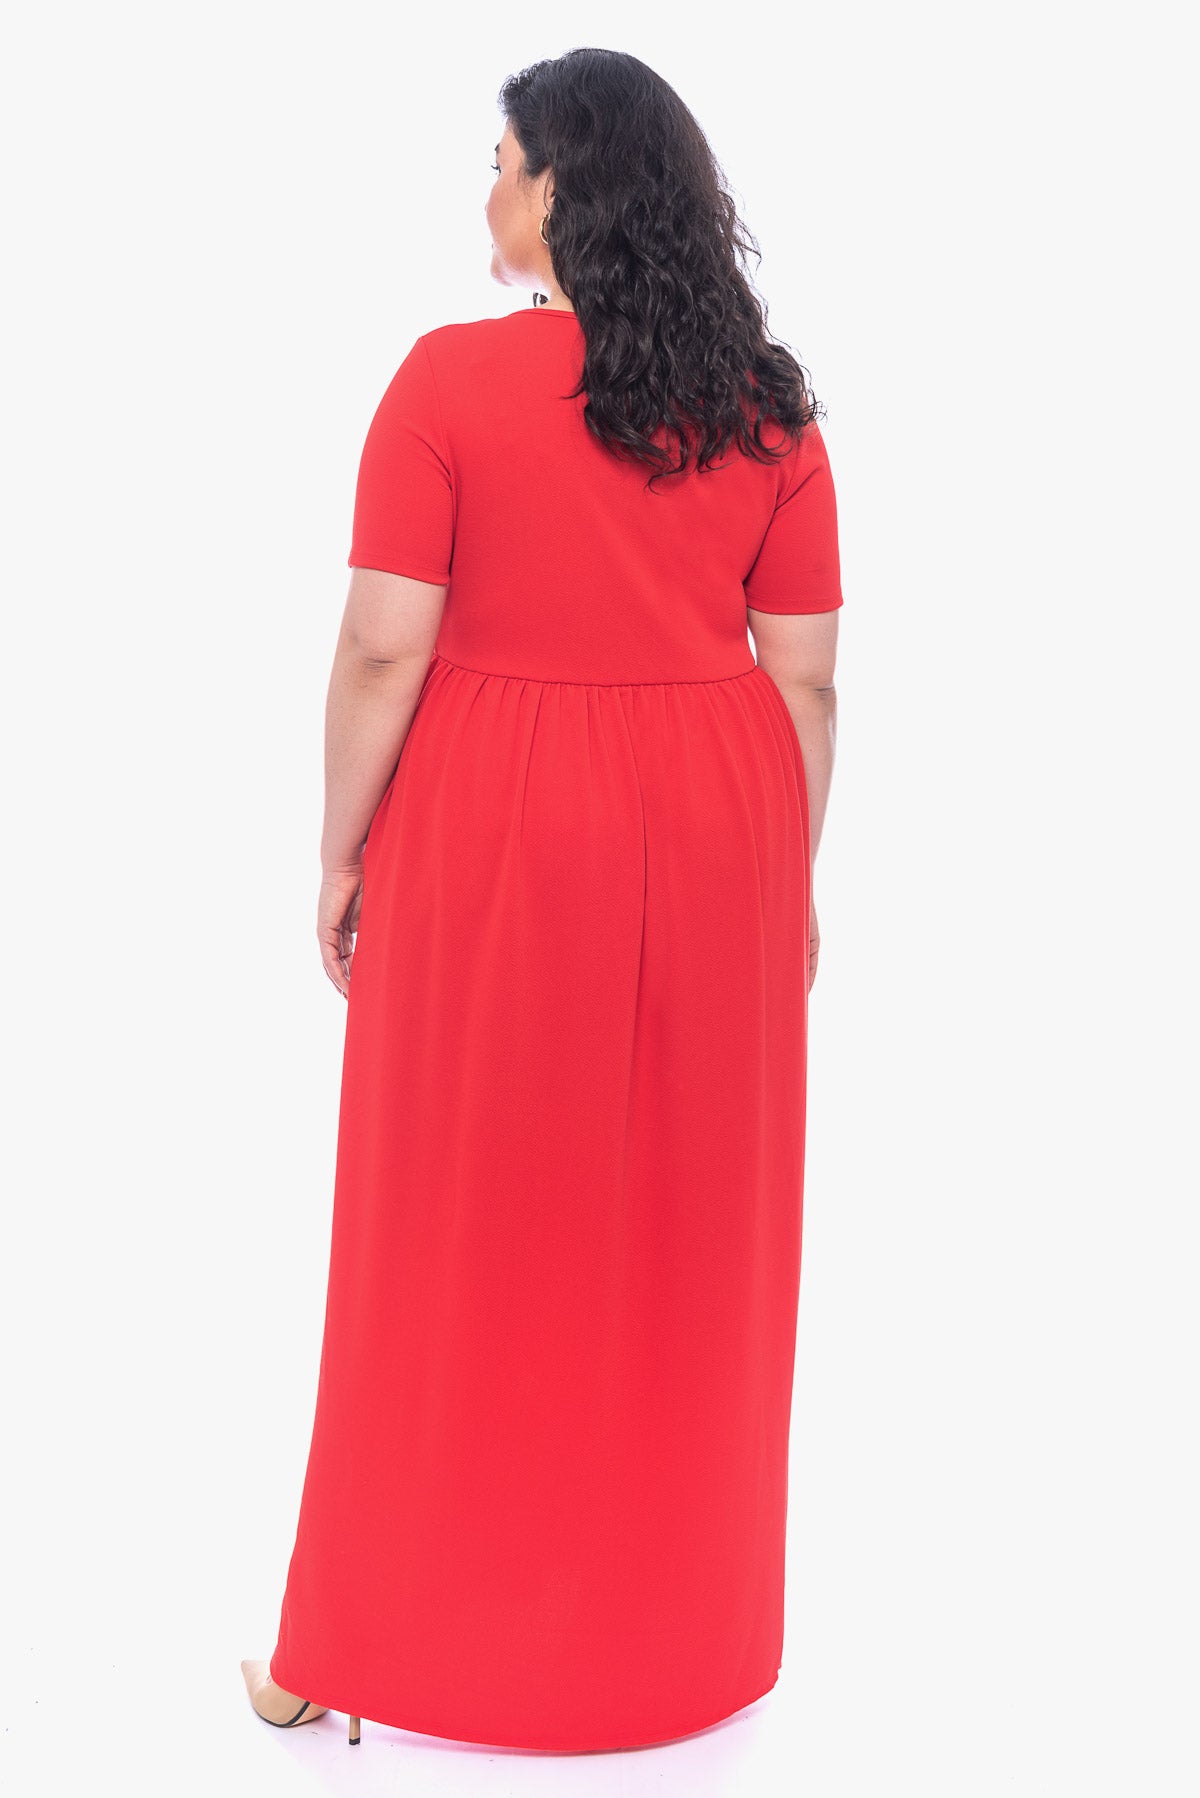 BELL red maxi dress